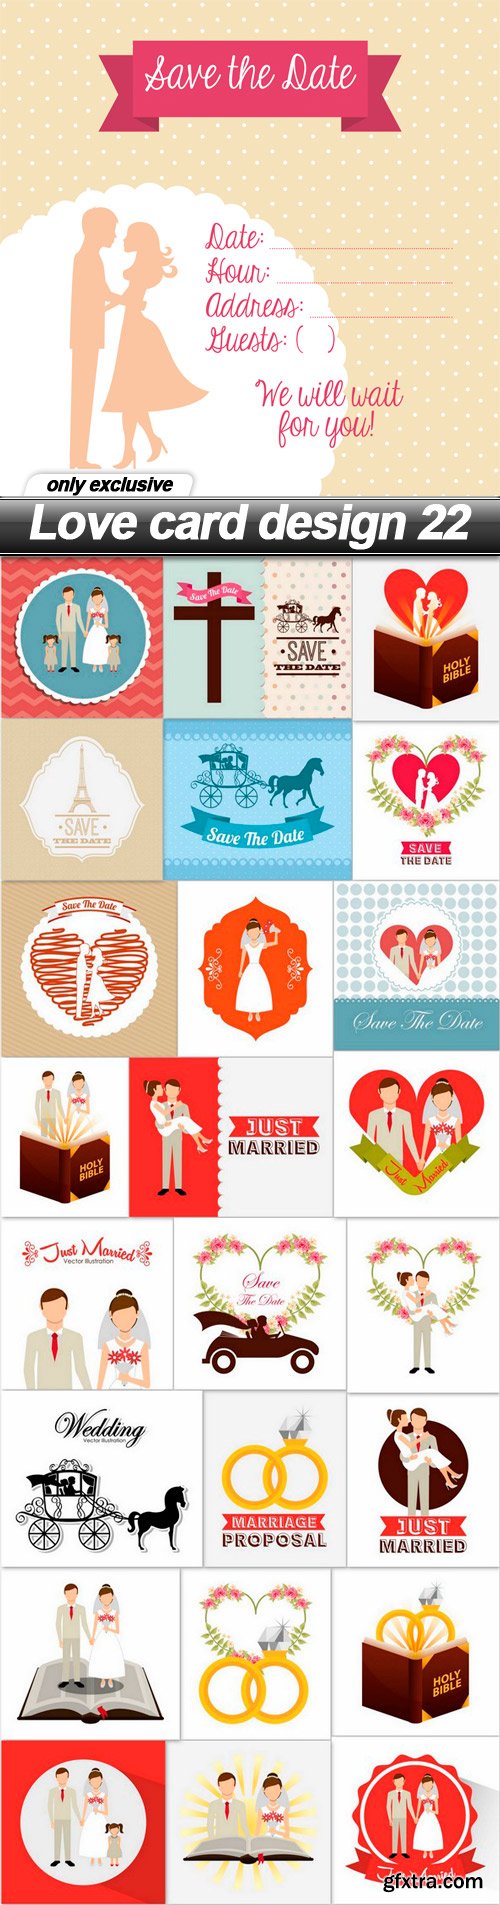 Love card design 22 - 25 EPS